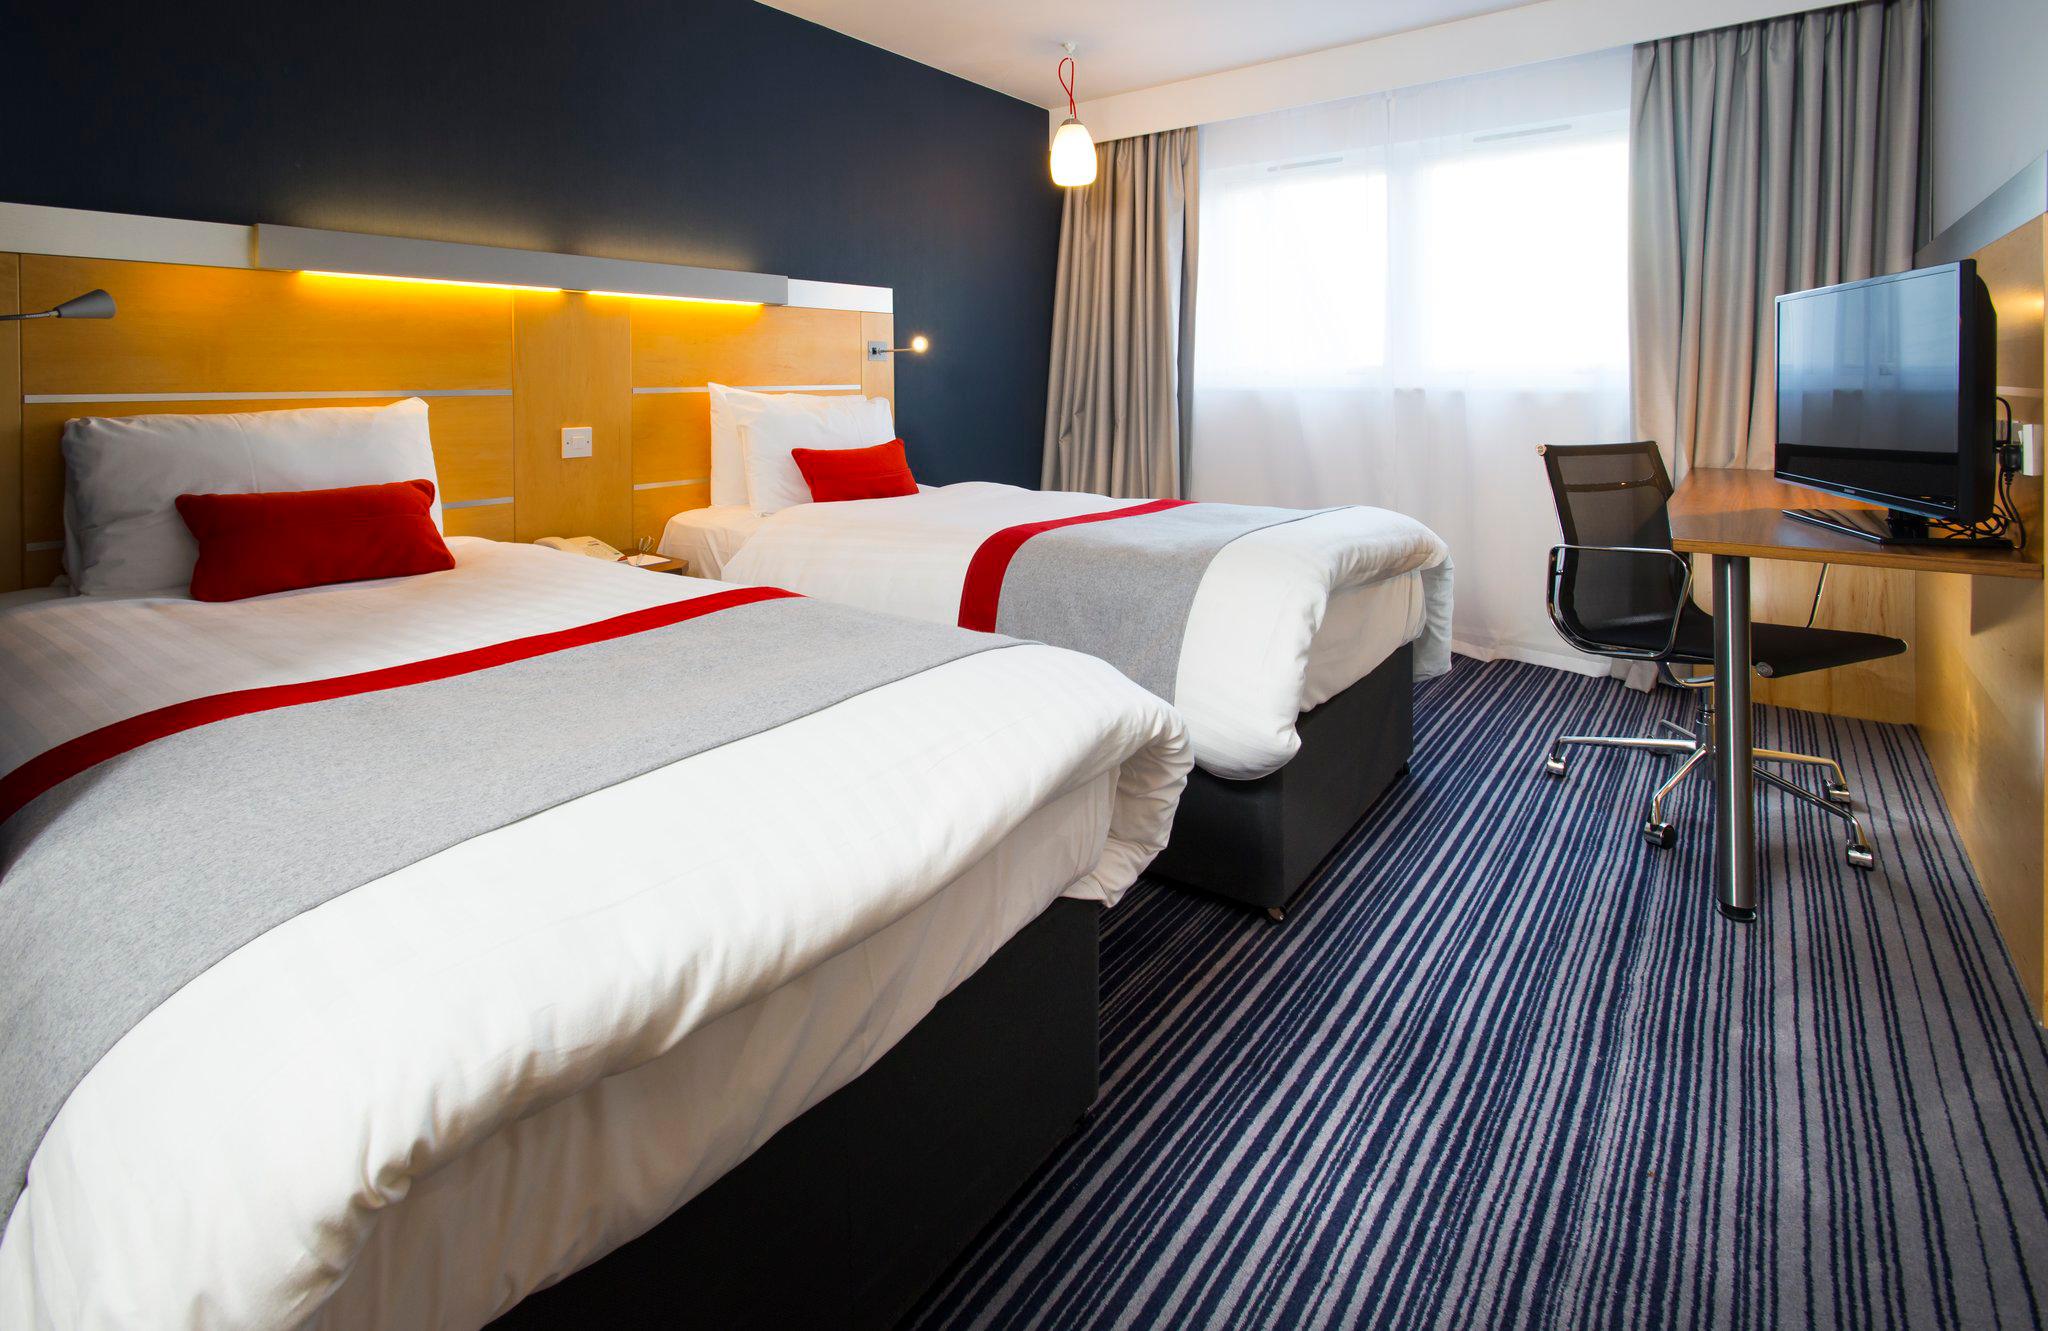 Holiday Inn Express London - Epsom Downs, an IHG Hotel Surrey 01372 755200